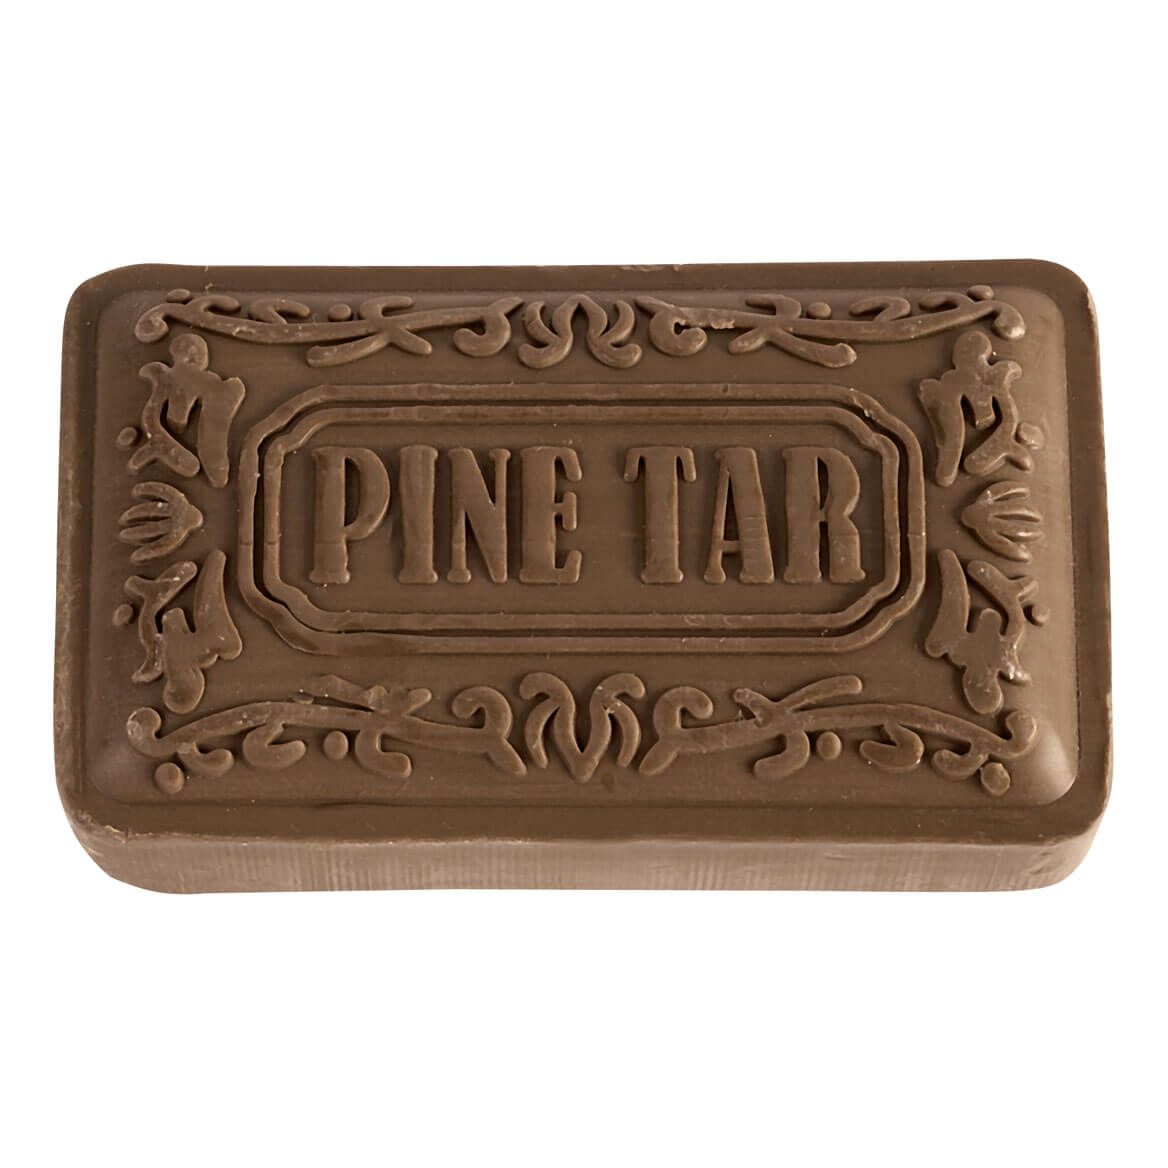 Pine Tar Soap, 3 Pack + '-' + 359683